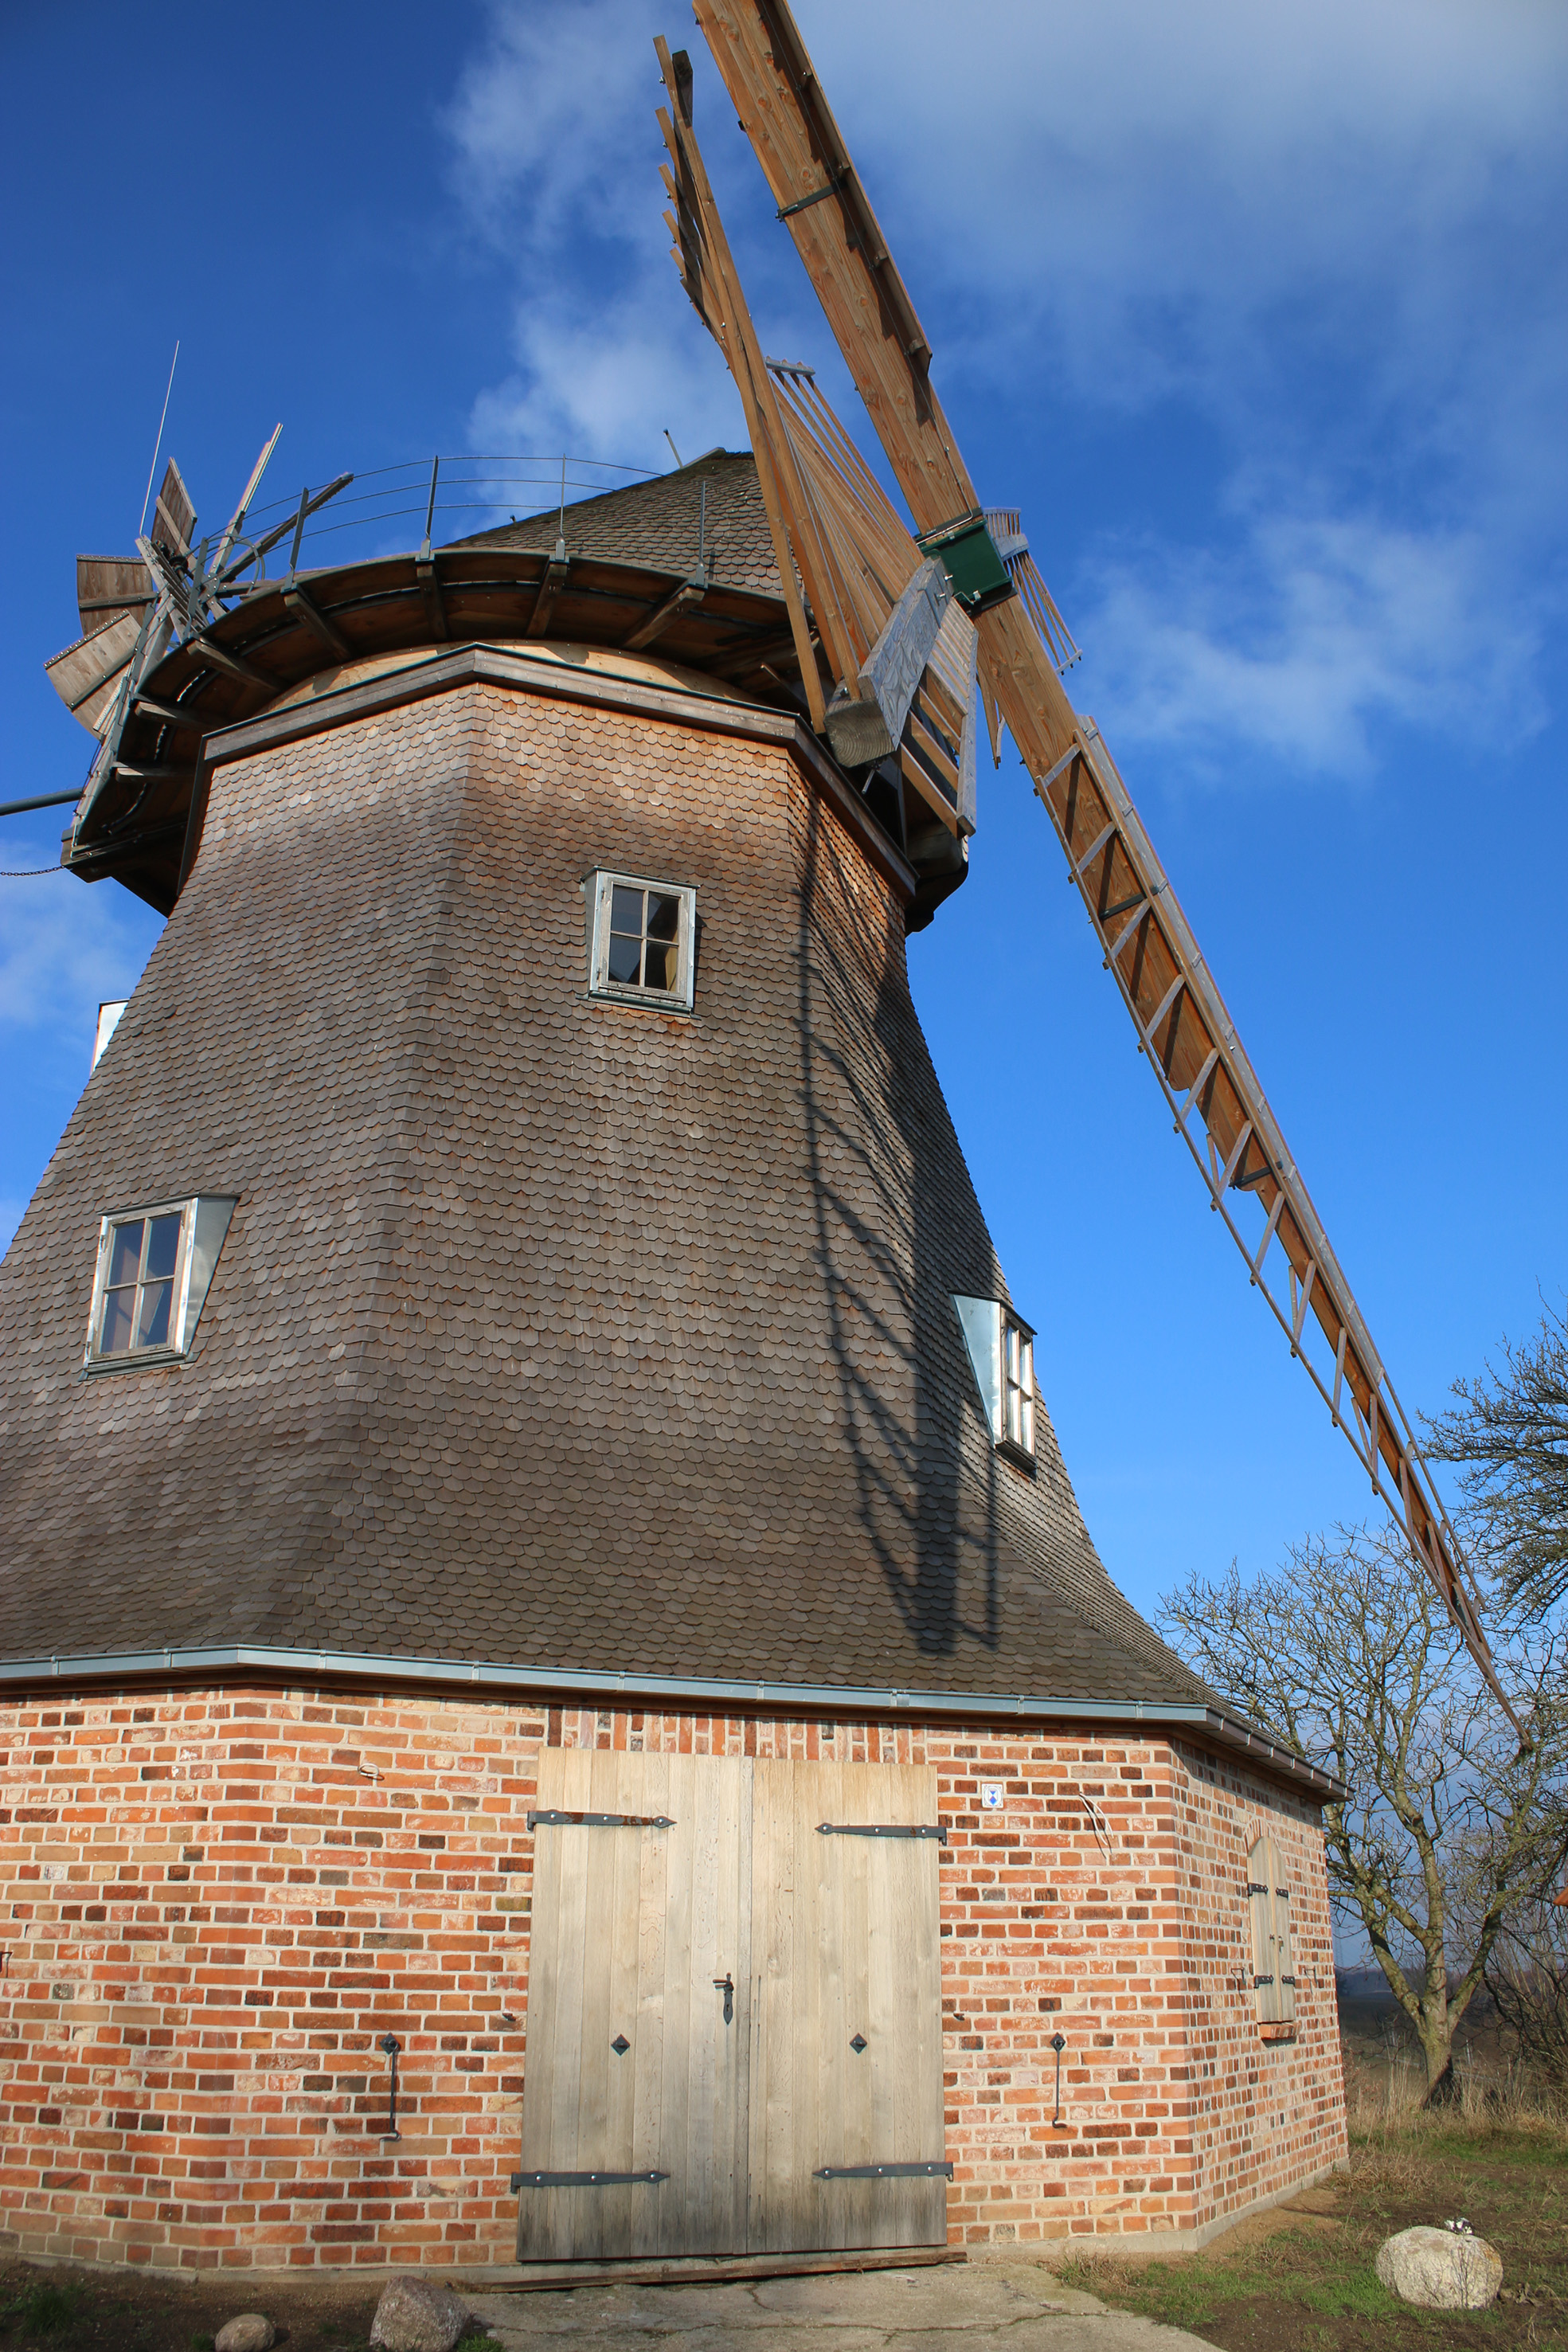 Windmühle Mustin © LOTTO MV